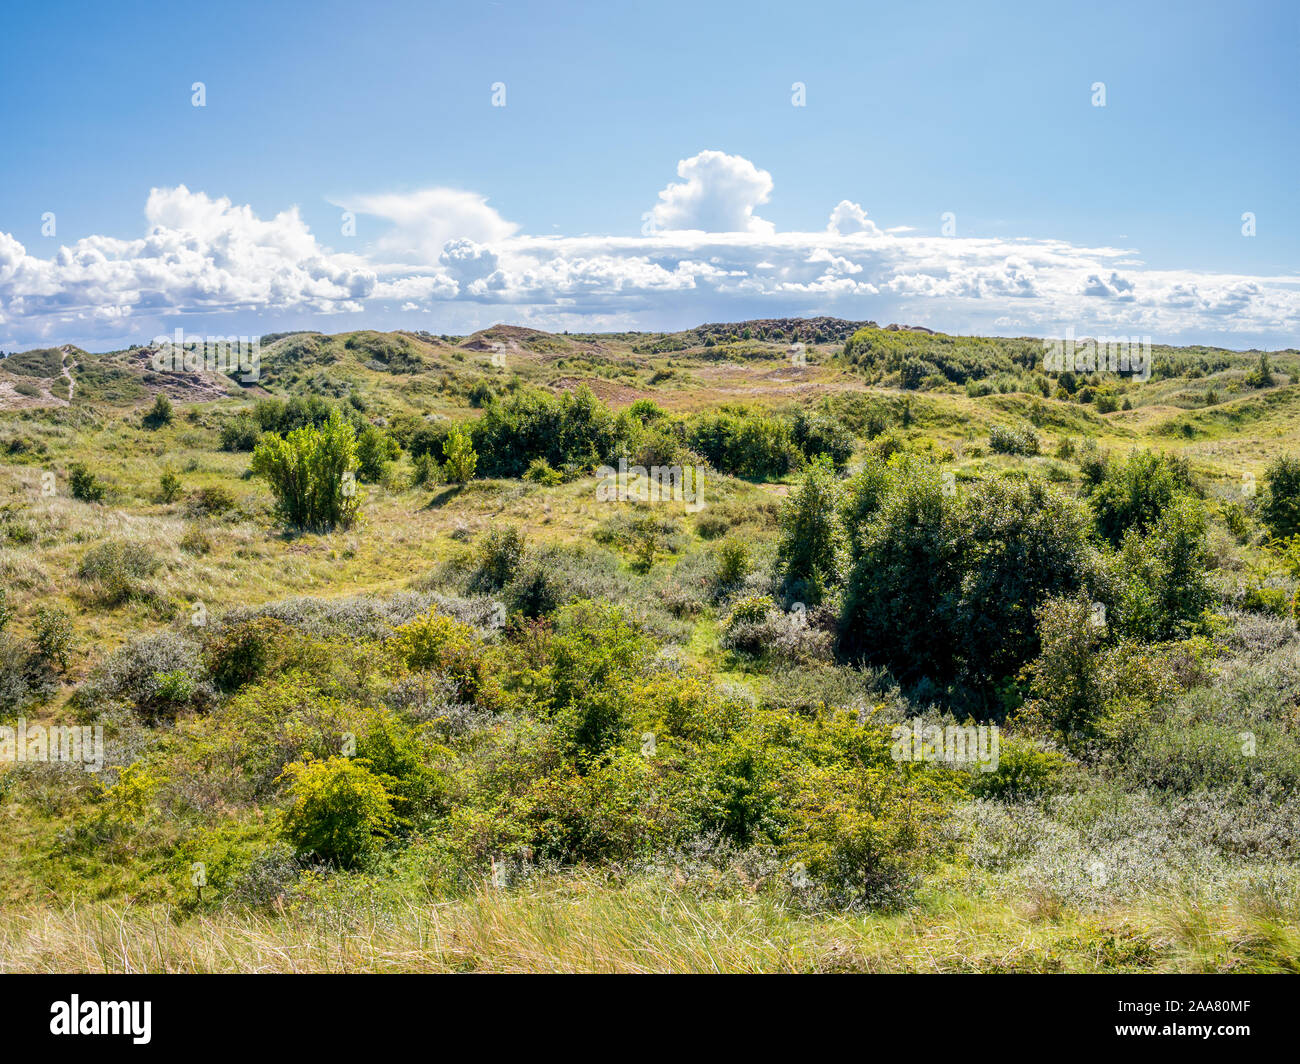 Westerduinen dunes with shrubs and grass on West Frisian island Schiermonnikoog, Netherlands Stock Photo